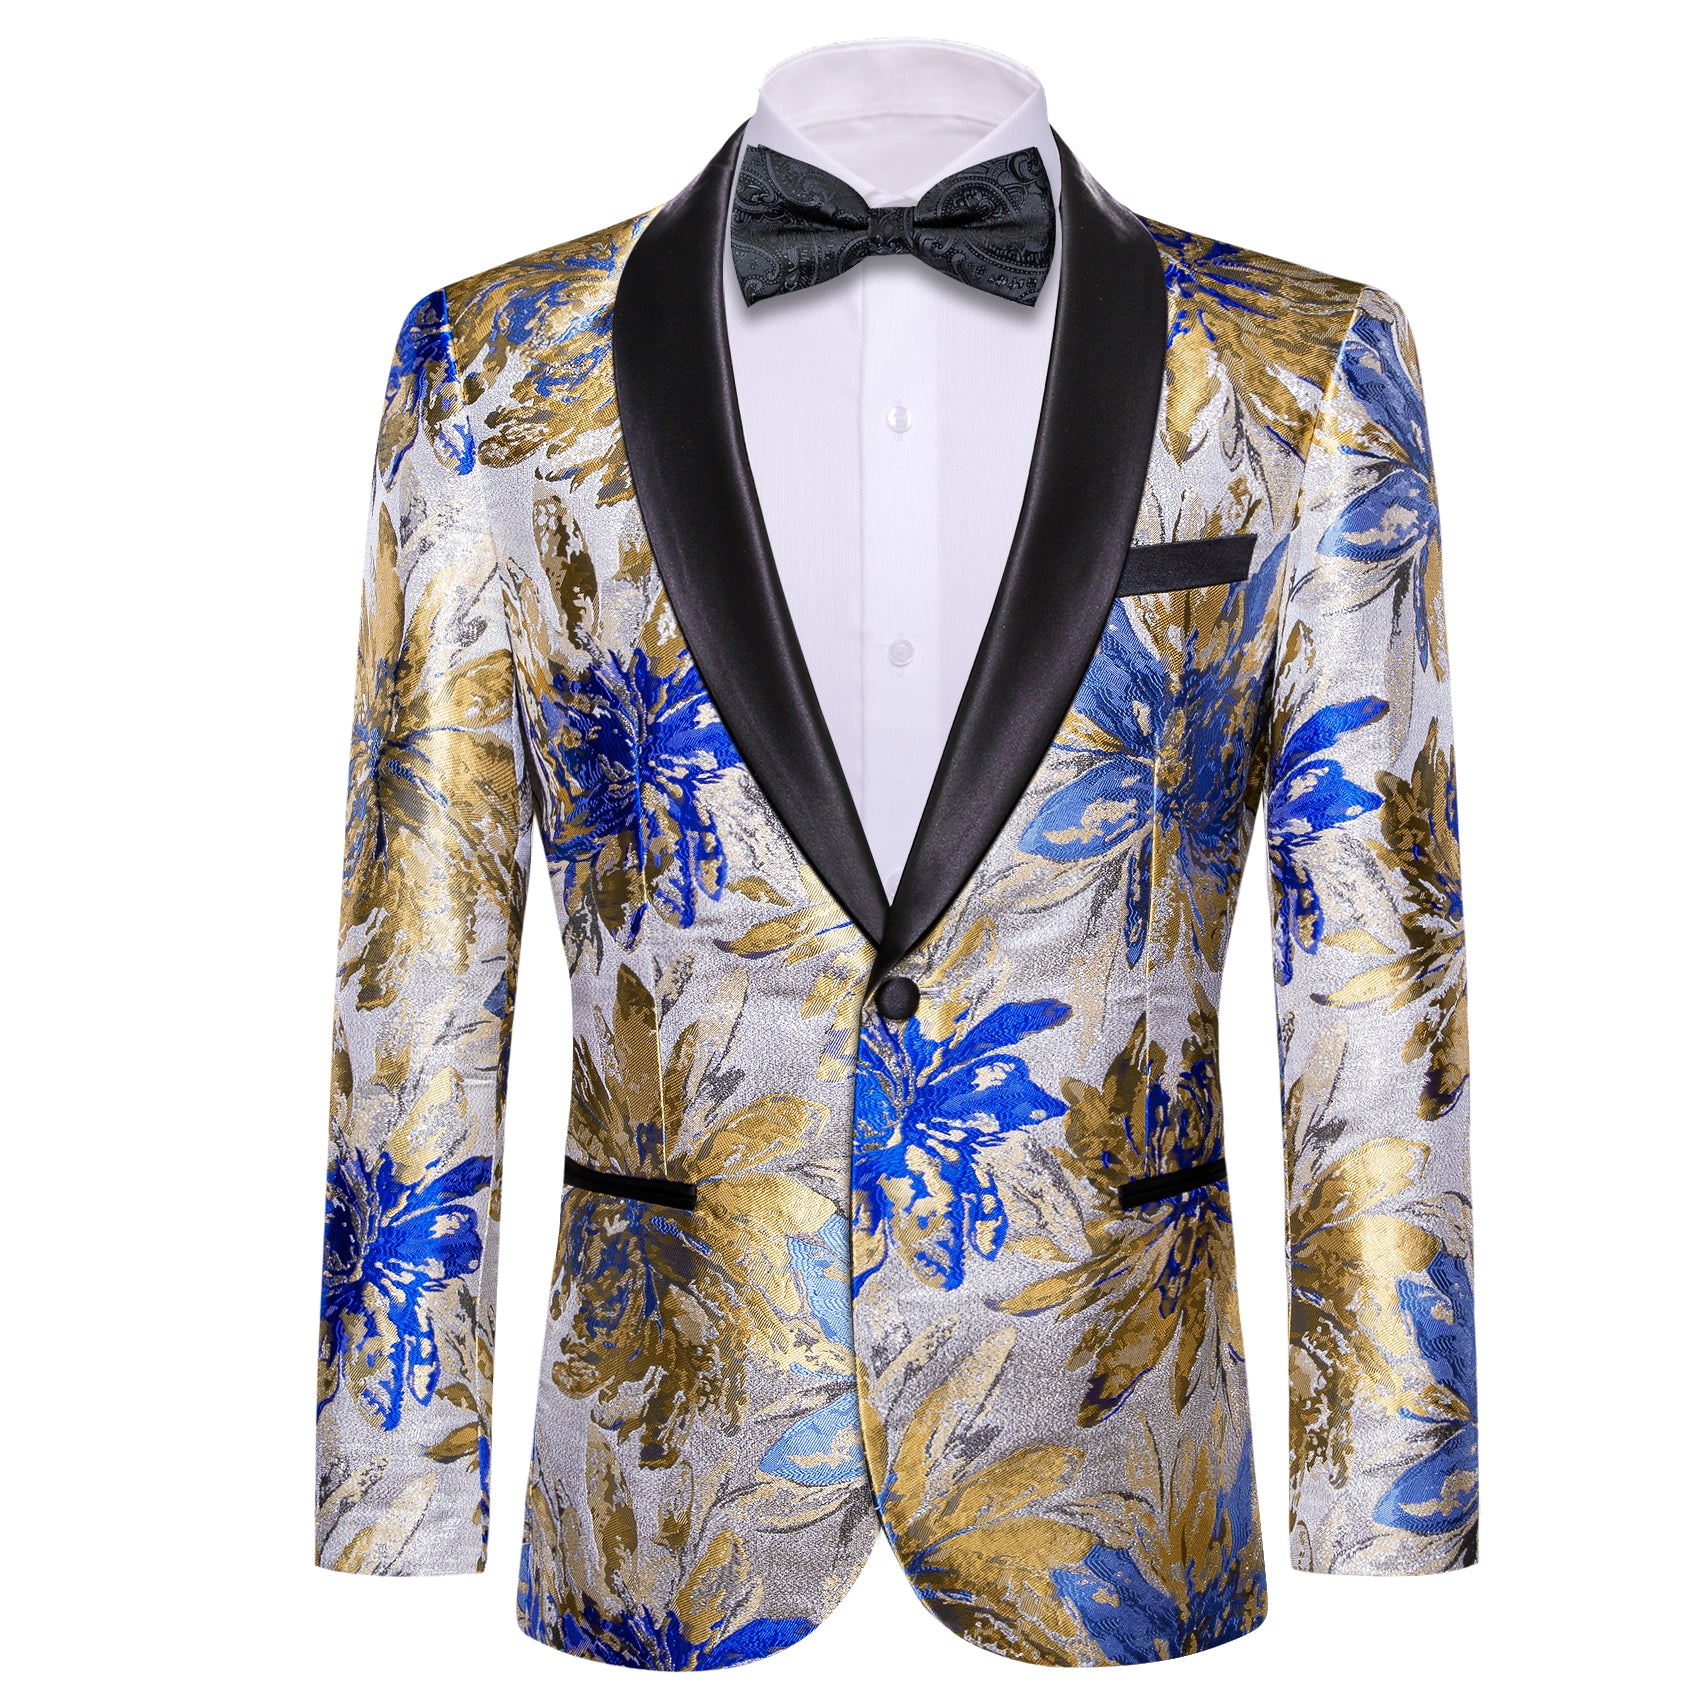 Barry.wang Men's Suit Silver Blue Floral Shawl Collar Suit Jacket